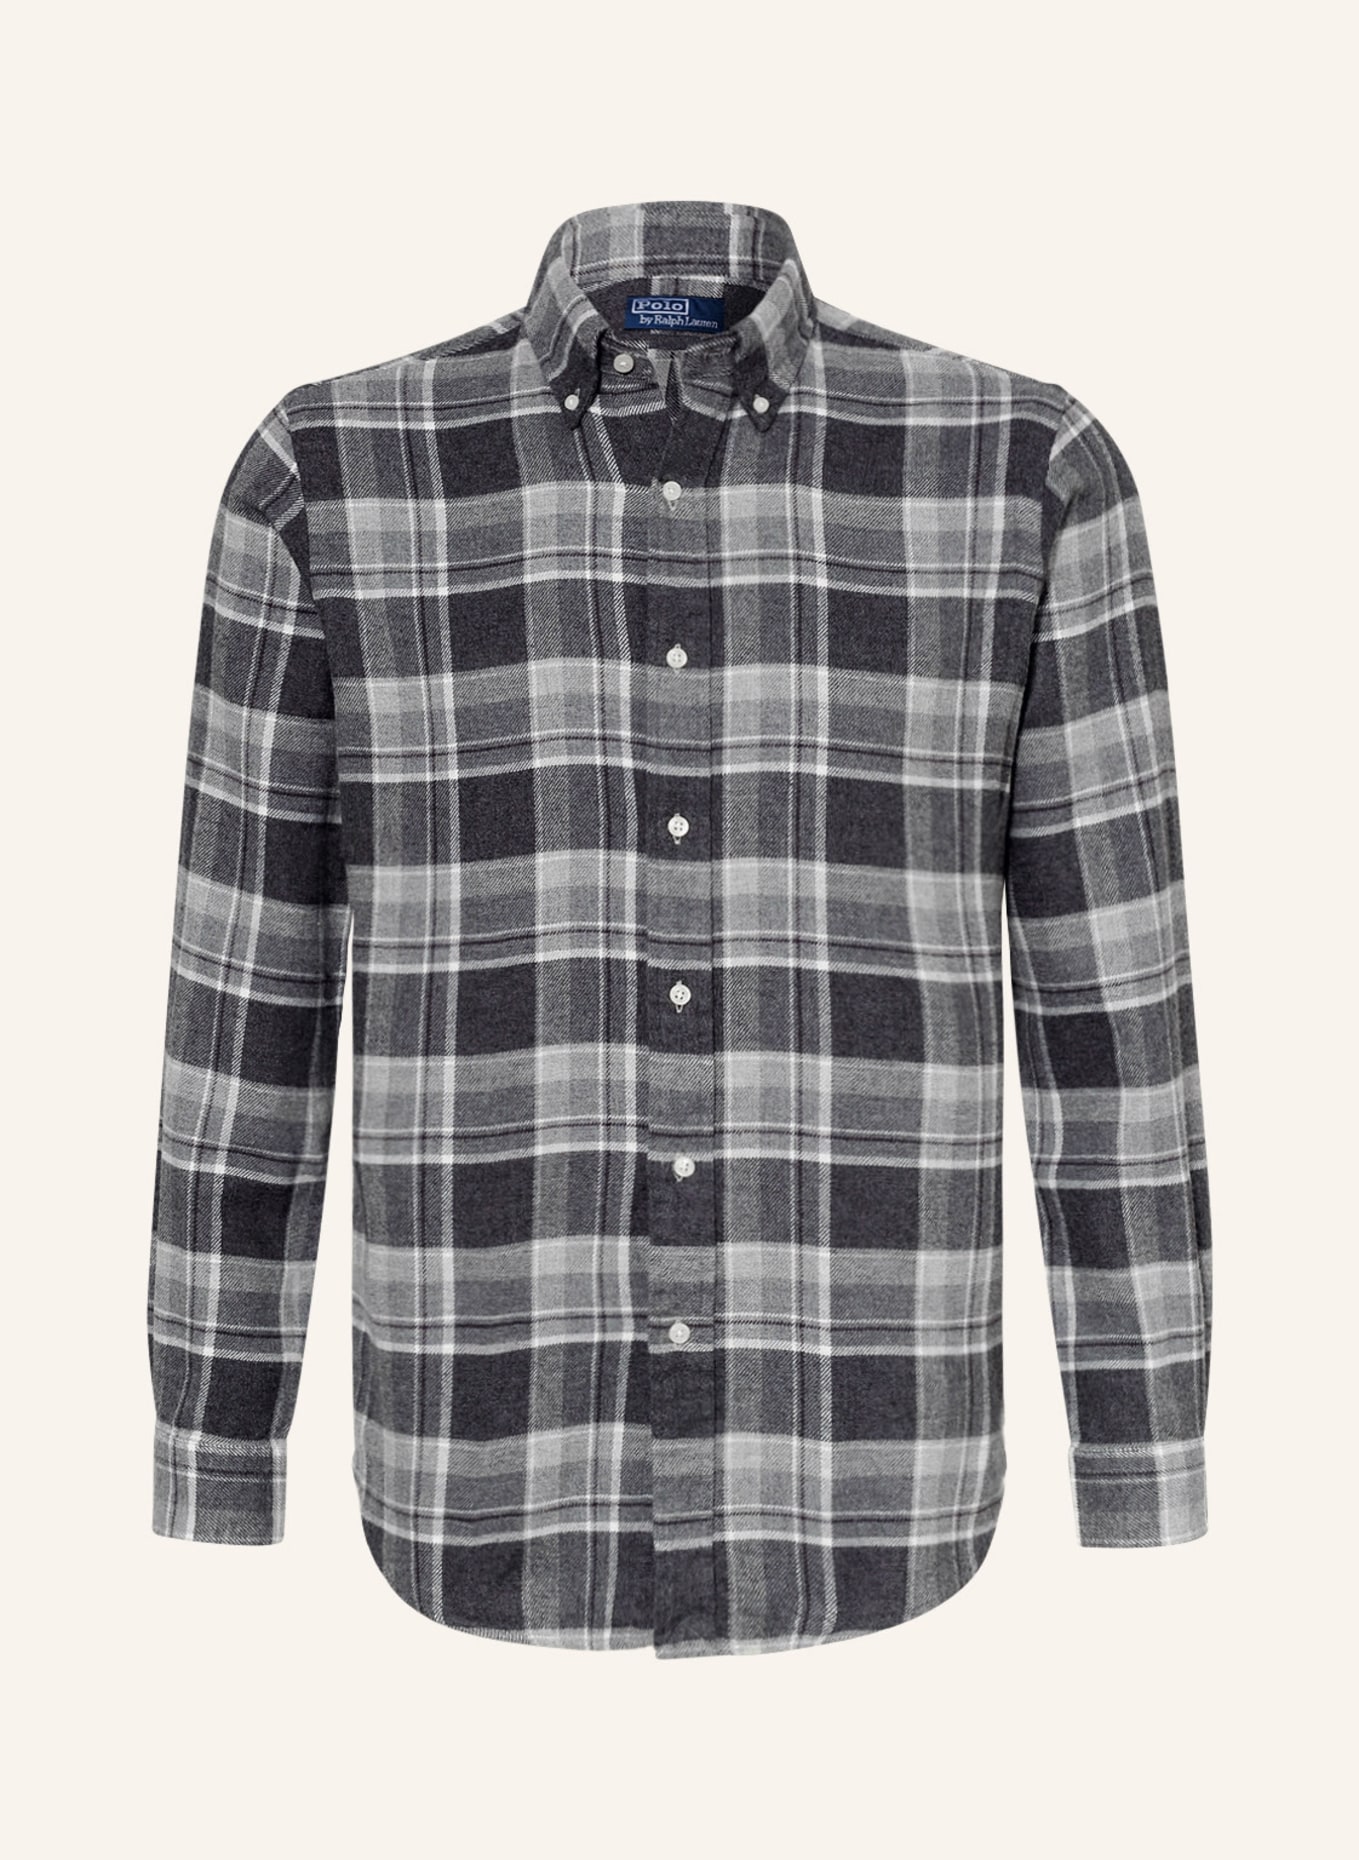 POLO RALPH LAUREN Flannel shirt classic fit, Color: GRAY/ DARK GRAY/ LIGHT GRAY (Image 1)